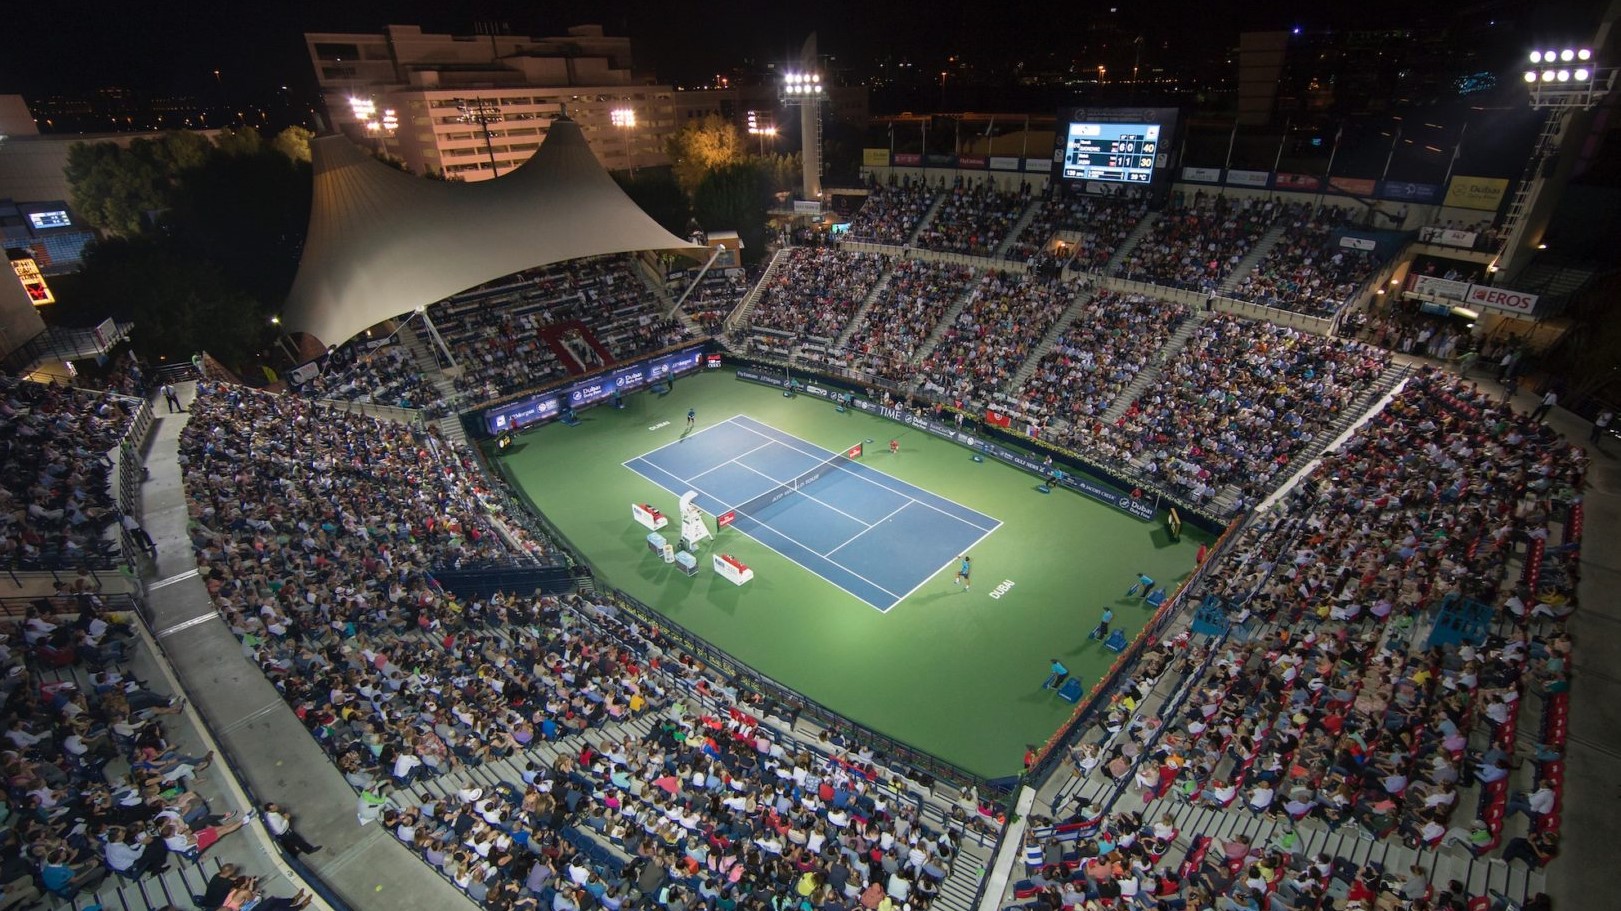 Tribuna del Dubai Duty Free Tennis Complex